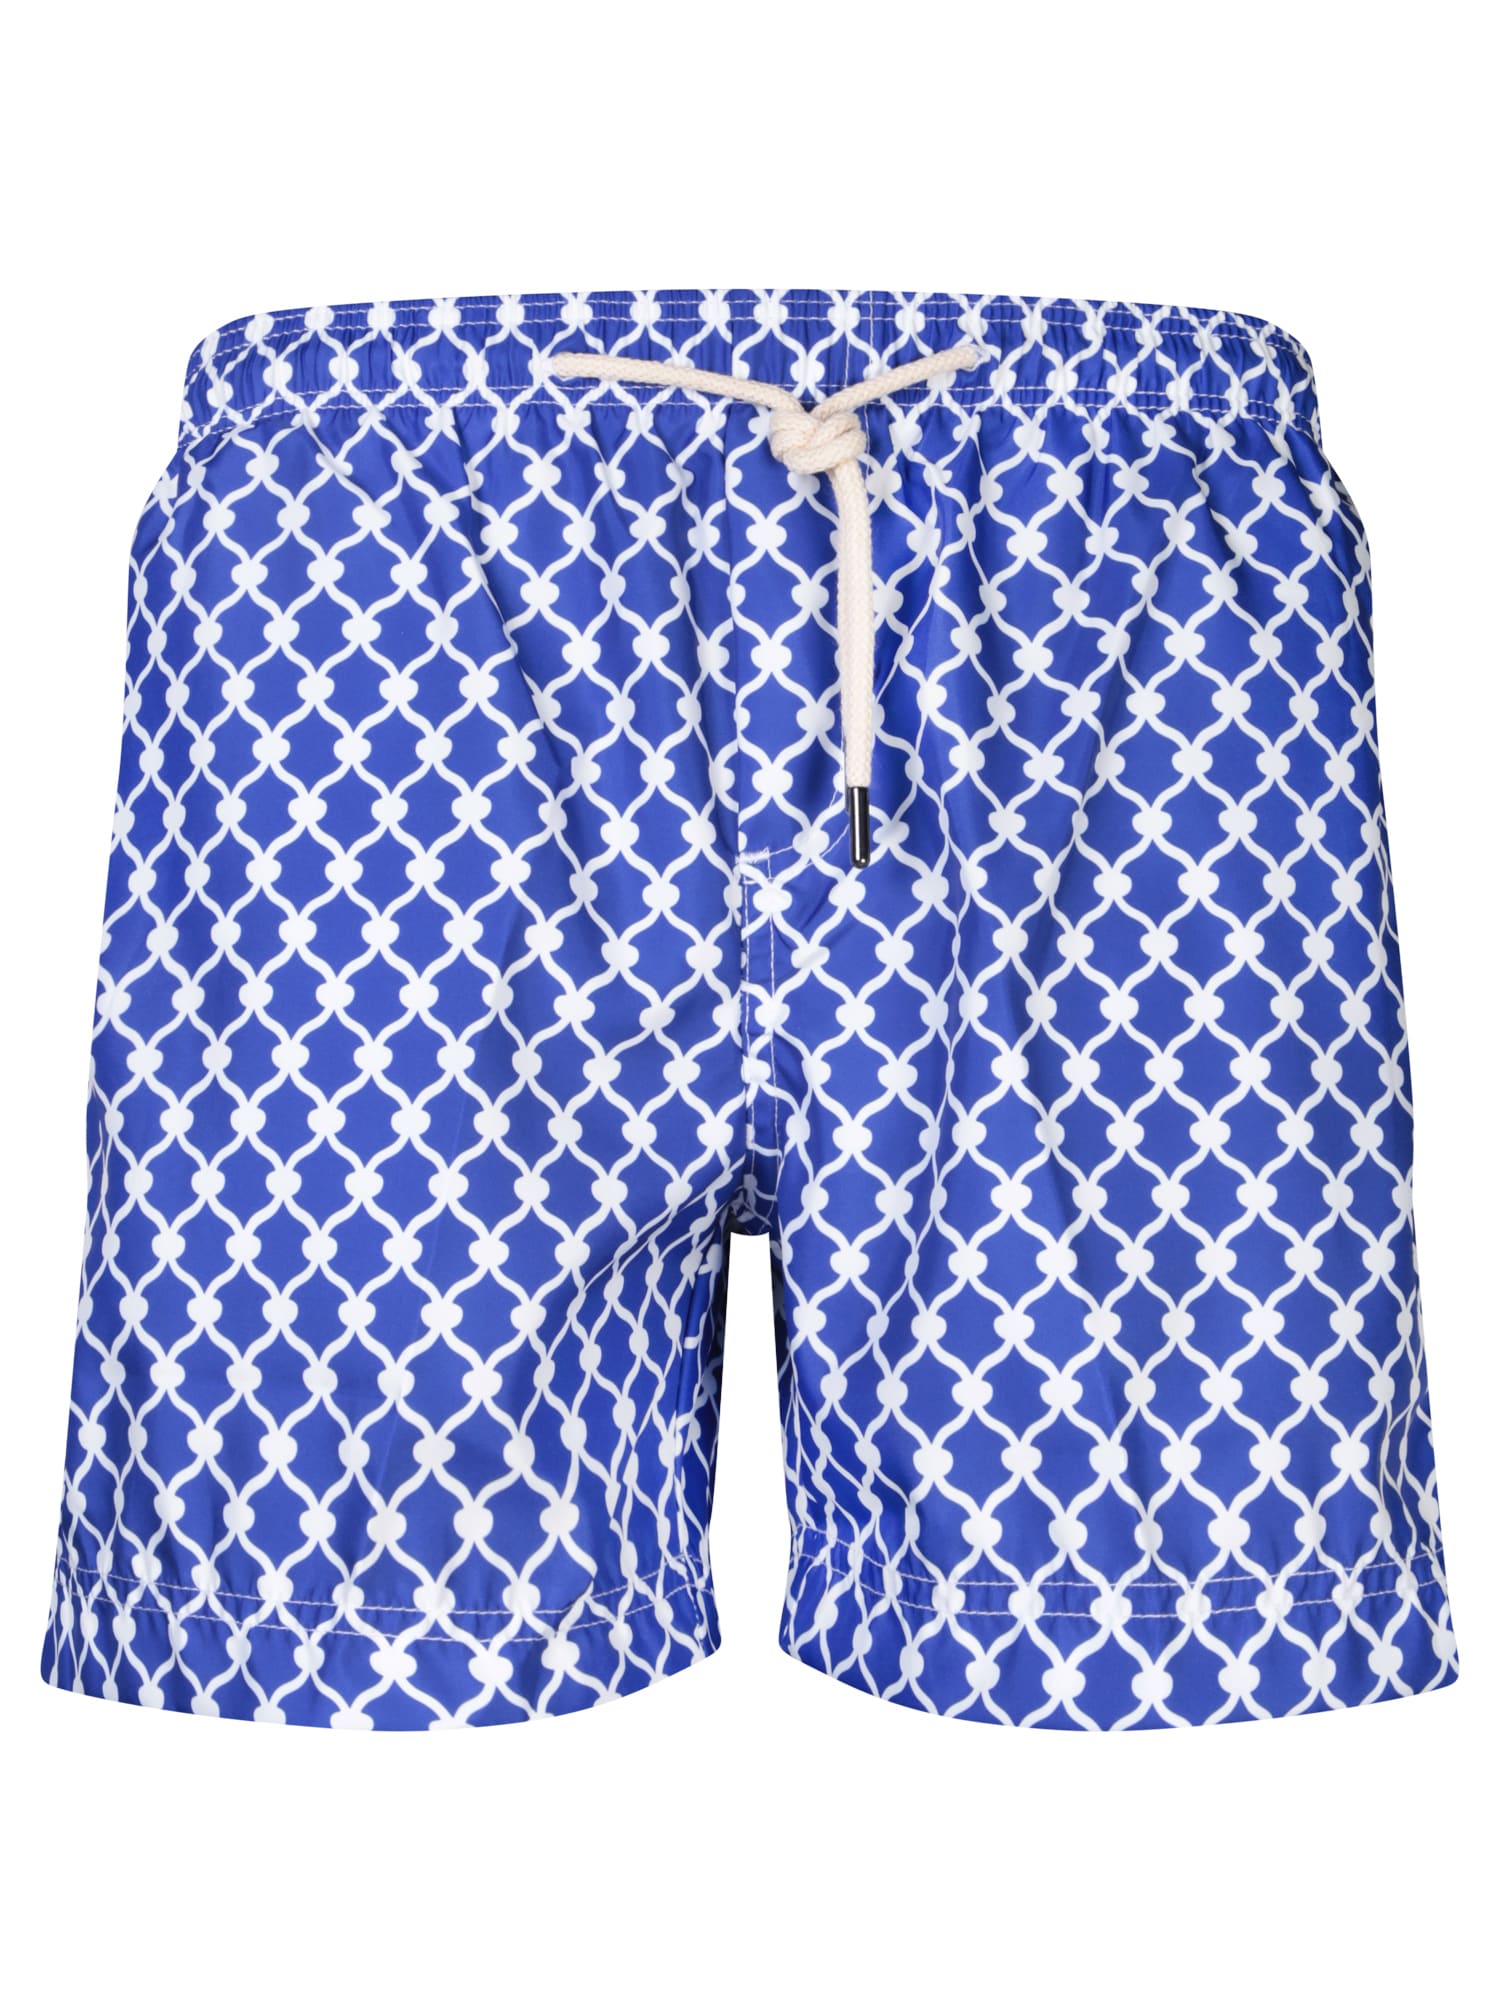 Shop Peninsula Swimwear Patterned Blue/white Boxer Swim Shorts